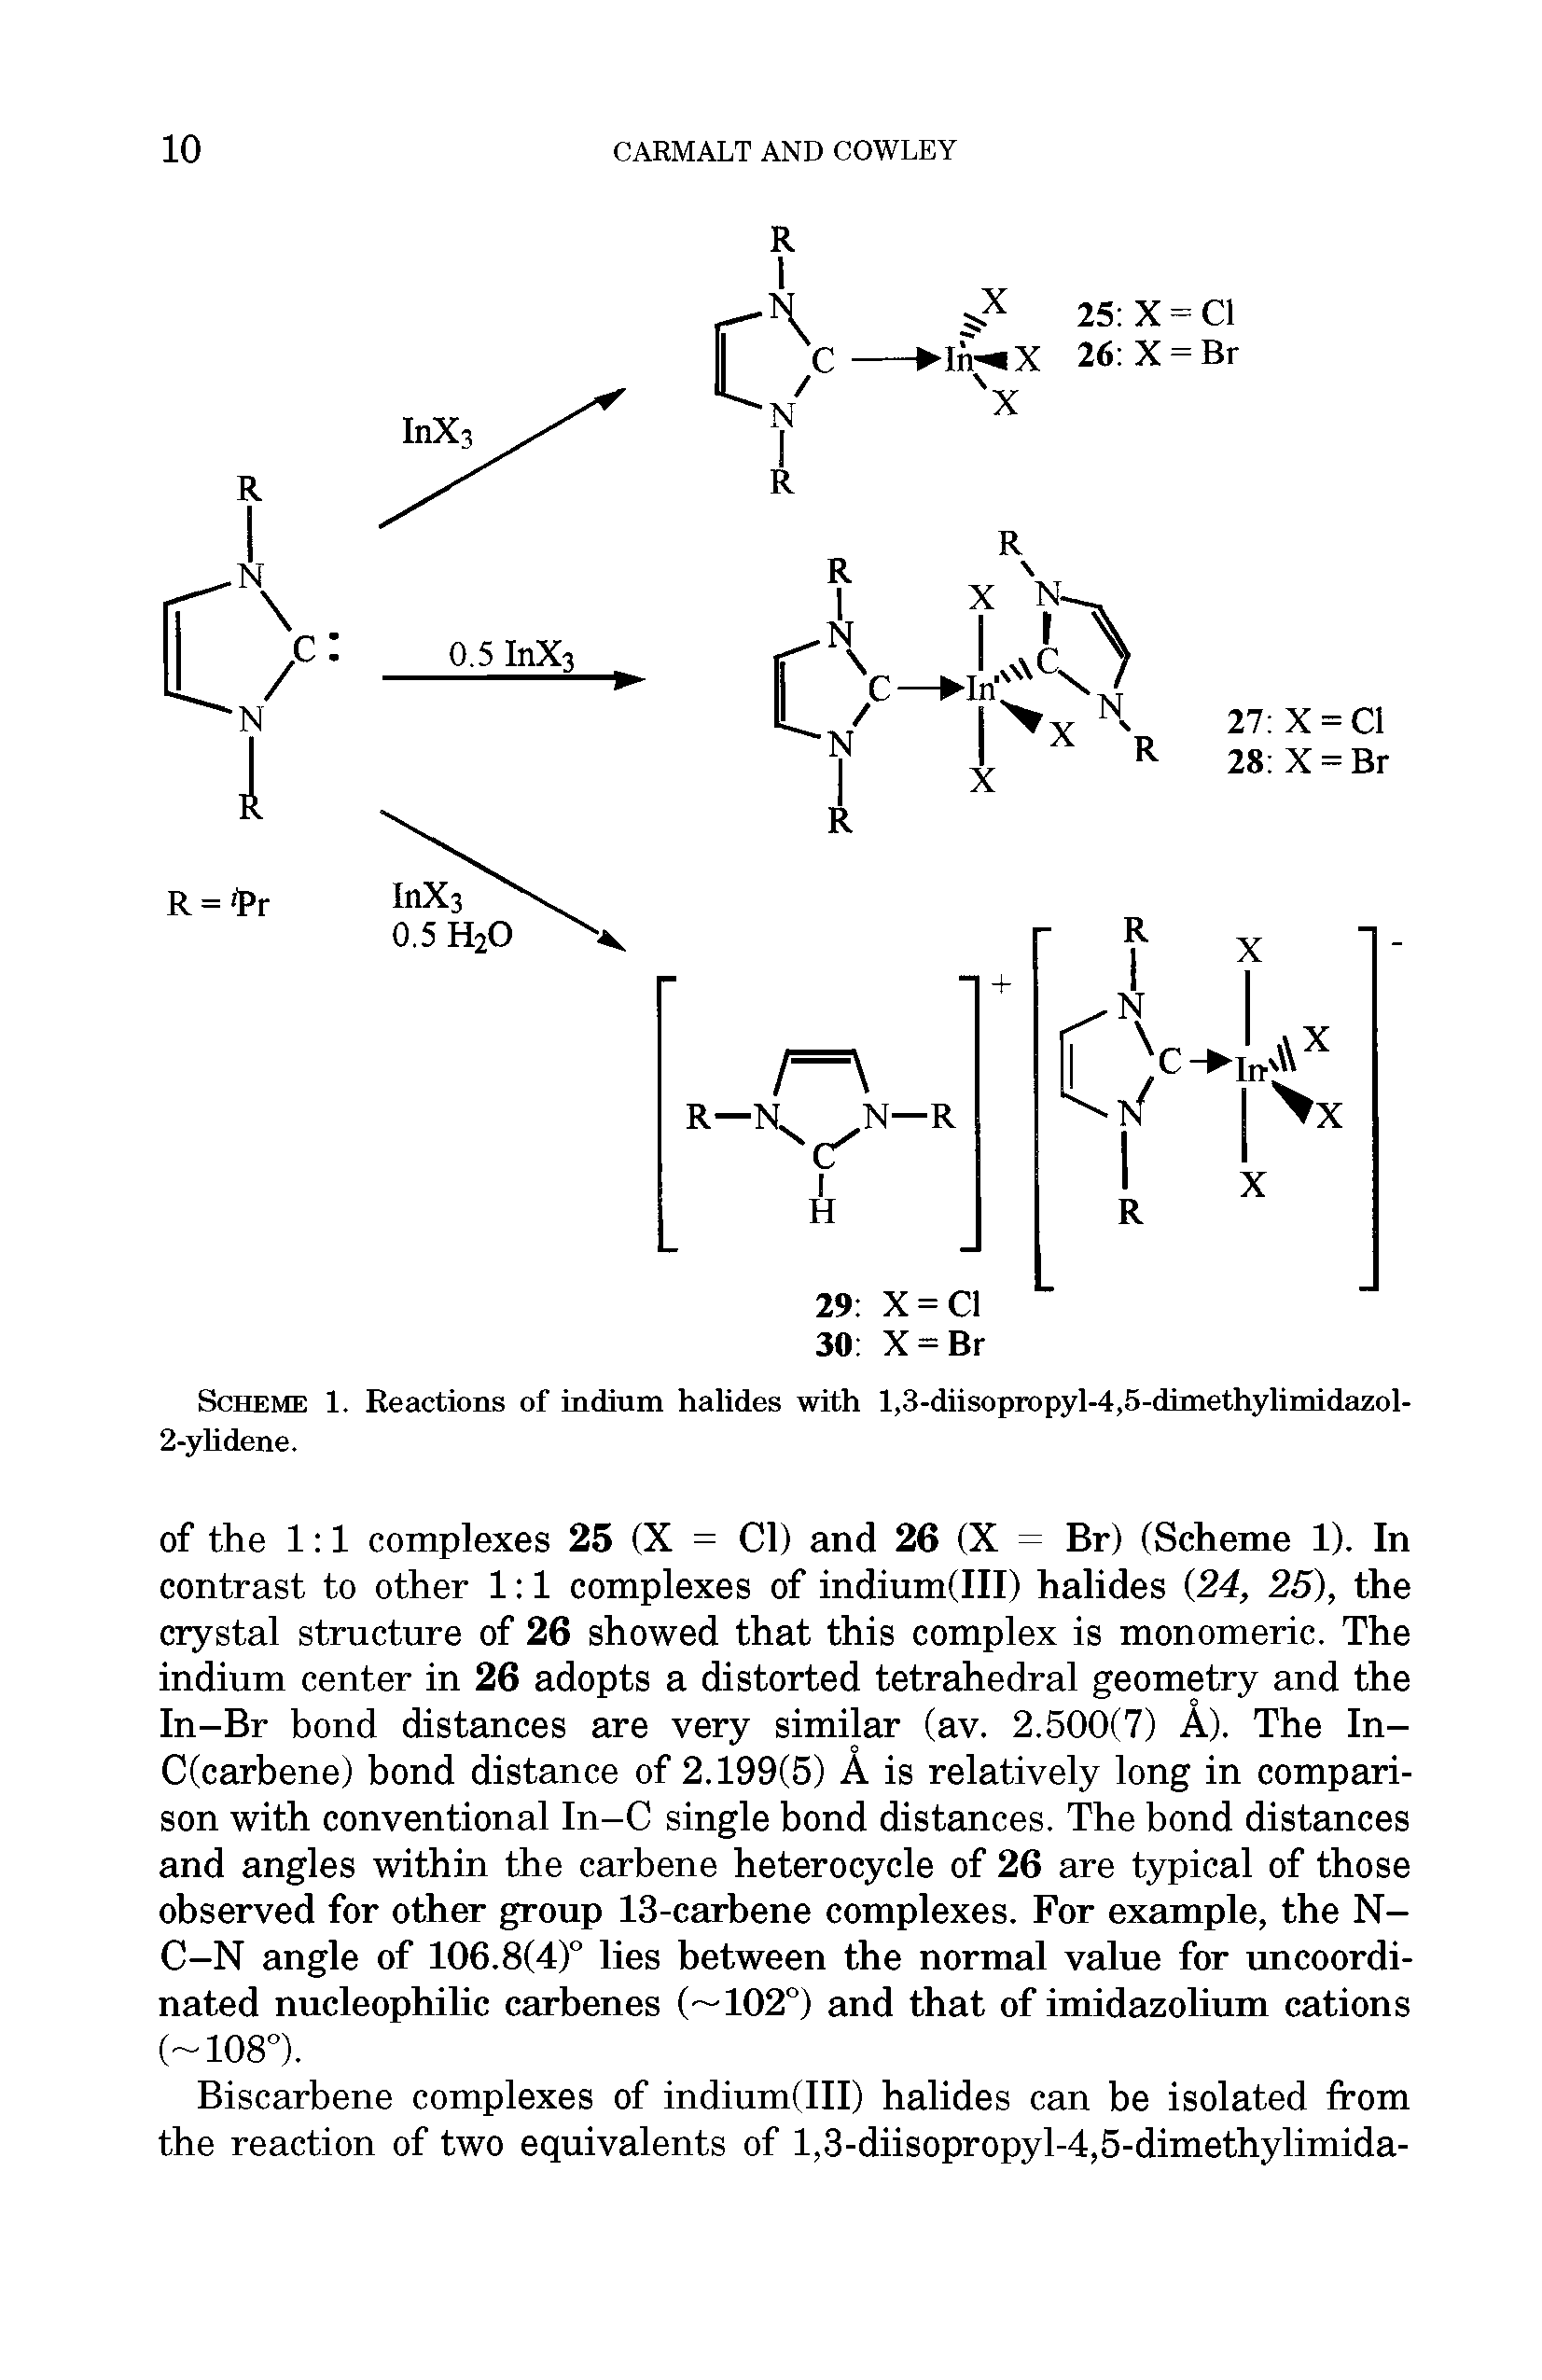 Scheme 1. Reactions of indium halides with l,3-diisopropyl-4,5-dimethylimidazol-2-yhdene.